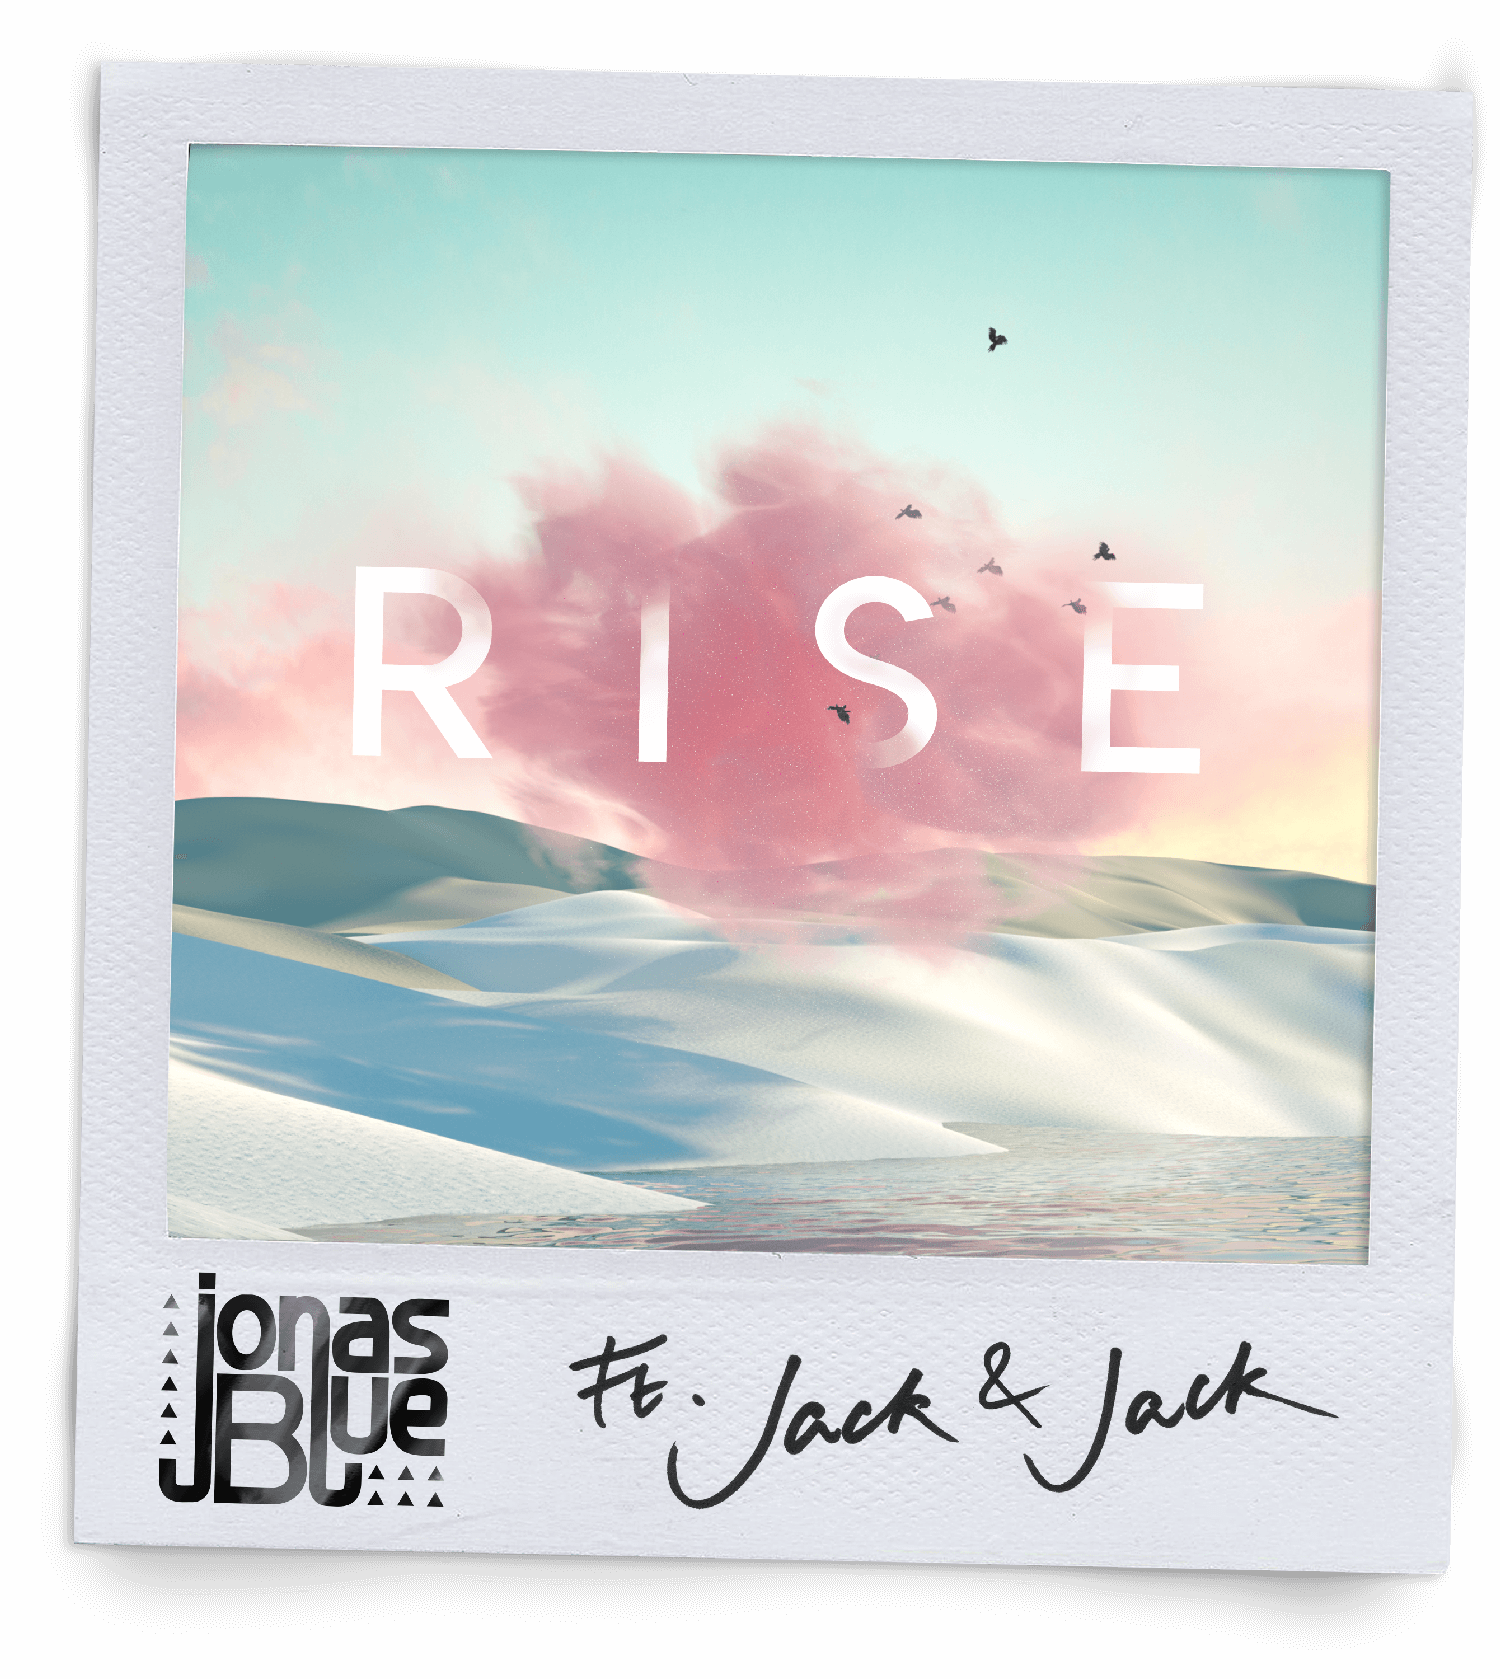 Jonas Blue - Rise ft. Jack & Jack